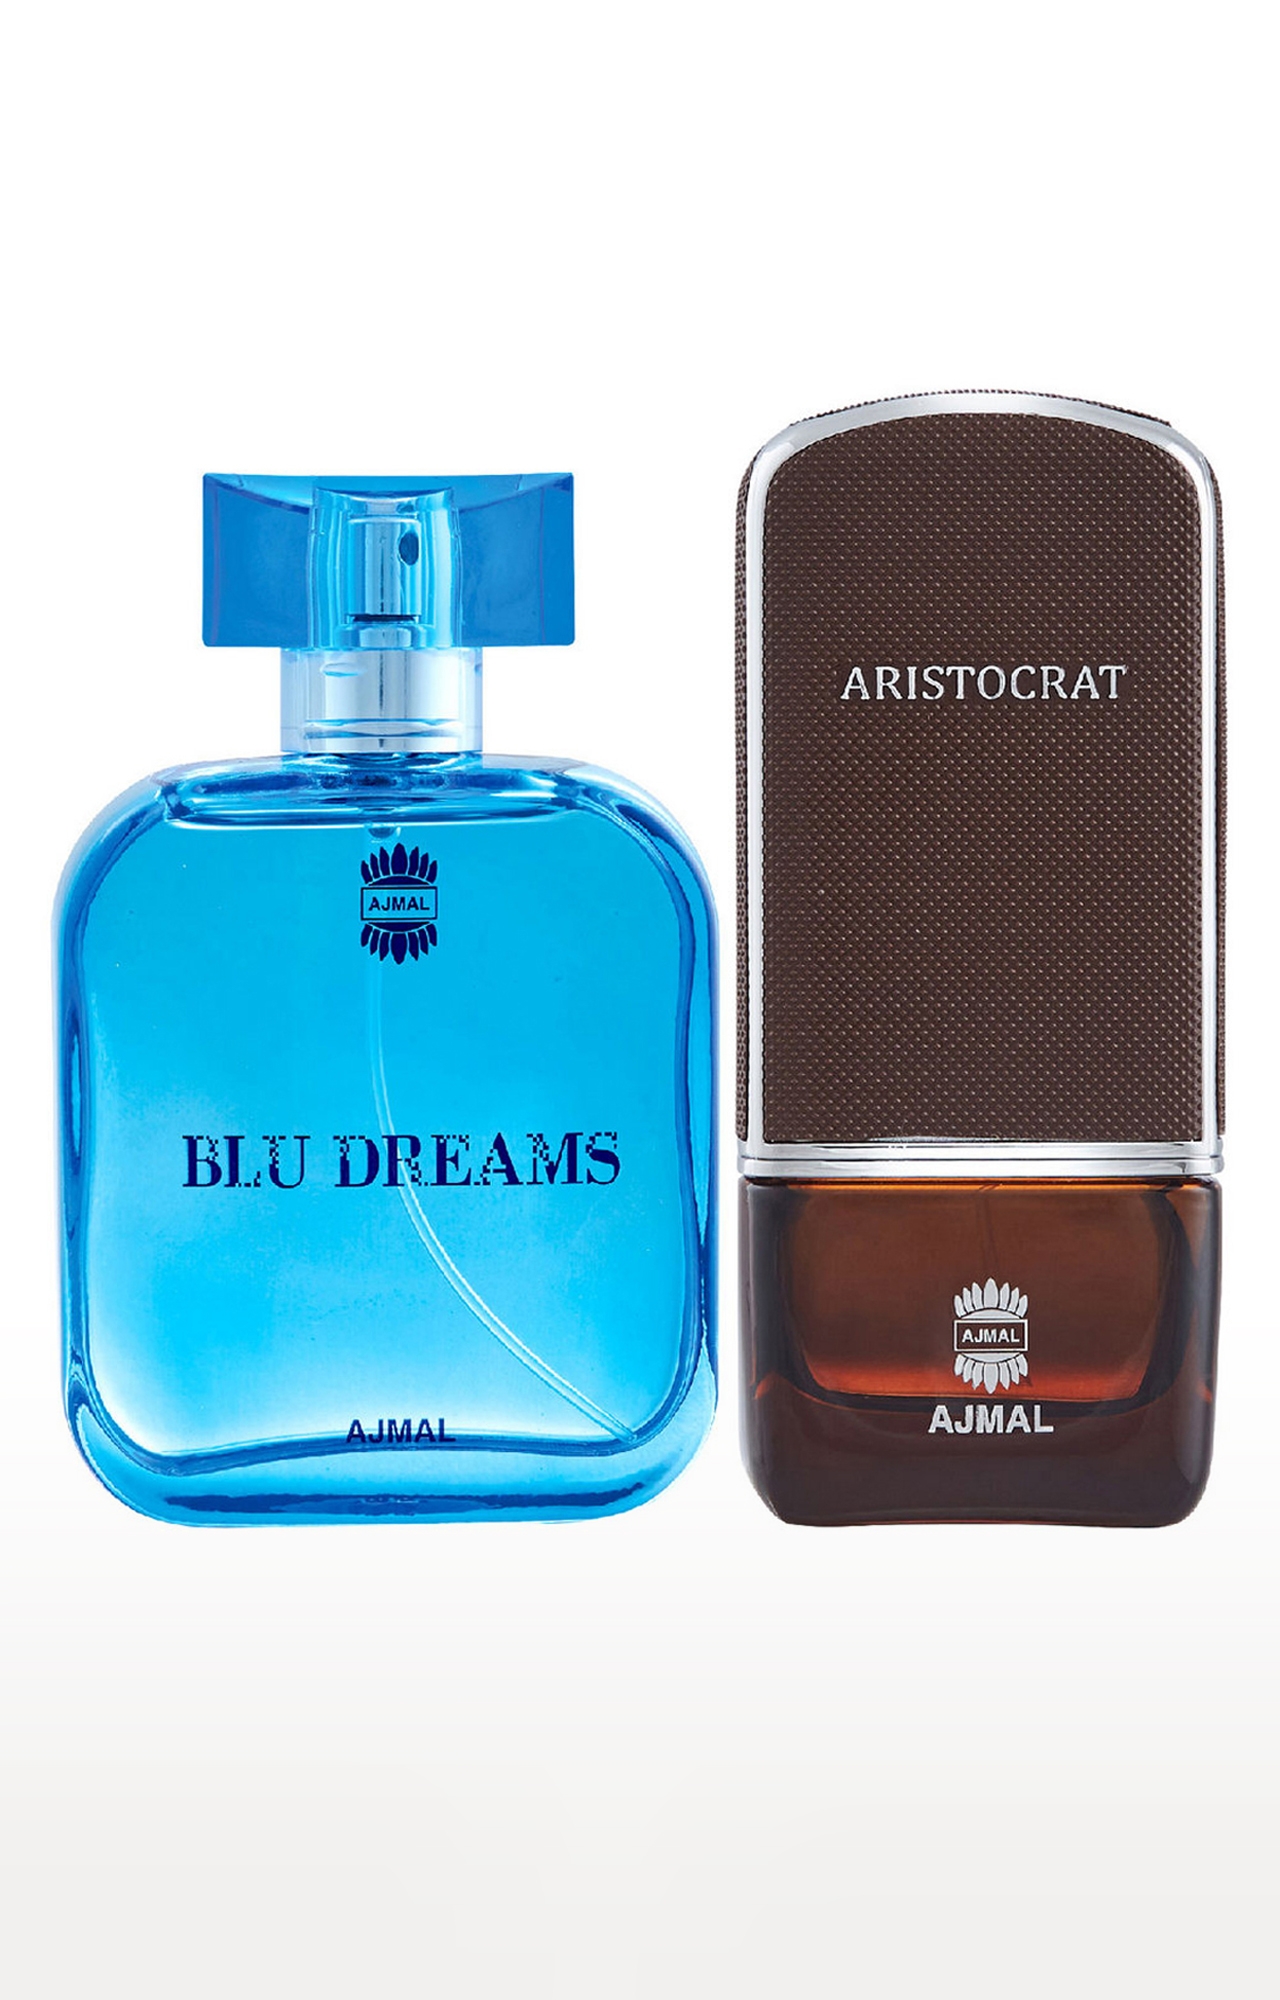 Ajmal Blu Dreams EDP Citurs Fruity Perfume 100ml for Men and Aristocrat EDP Perfume 75ml for Men